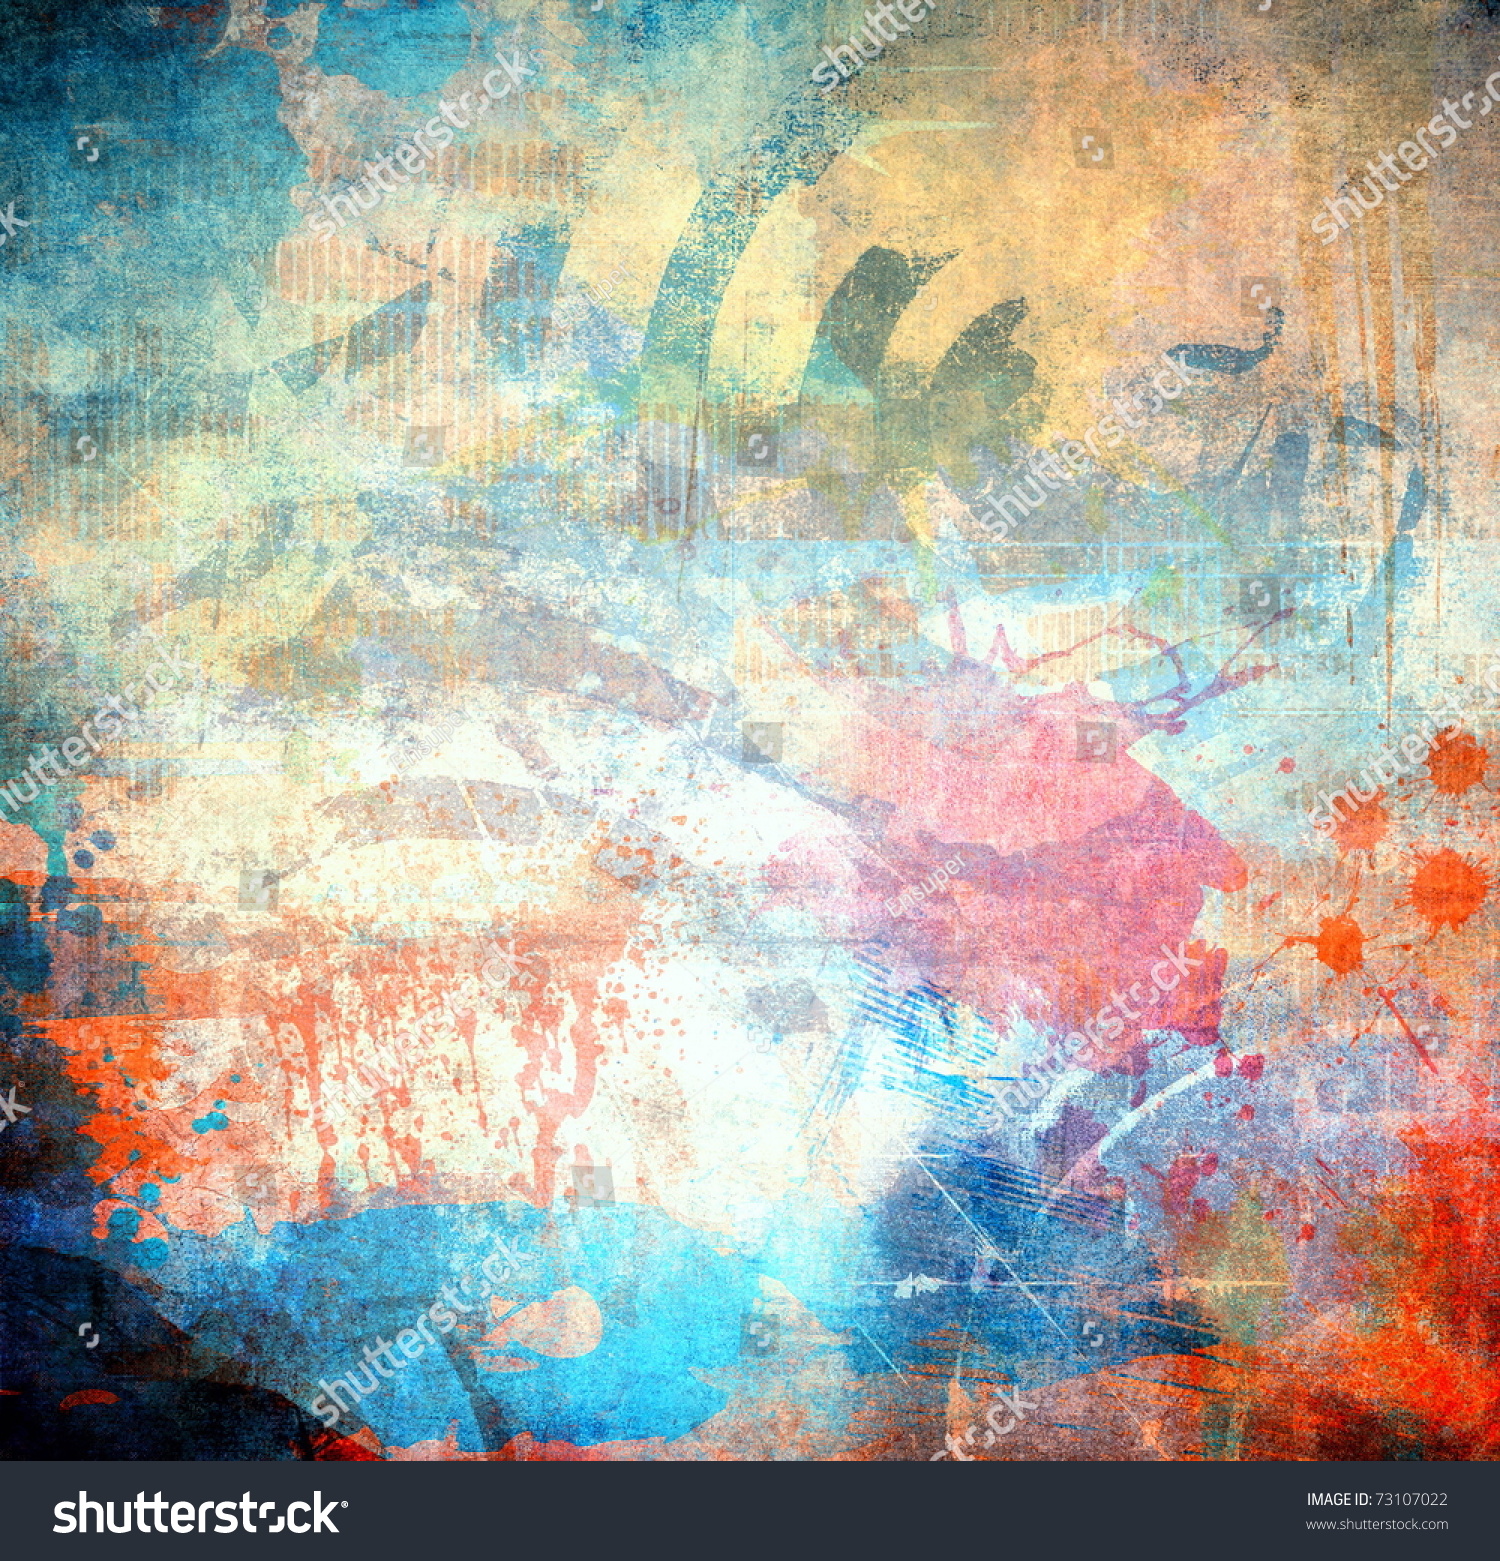 Abstract Grunge Background, Art Illustration - 73107022 : Shutterstock